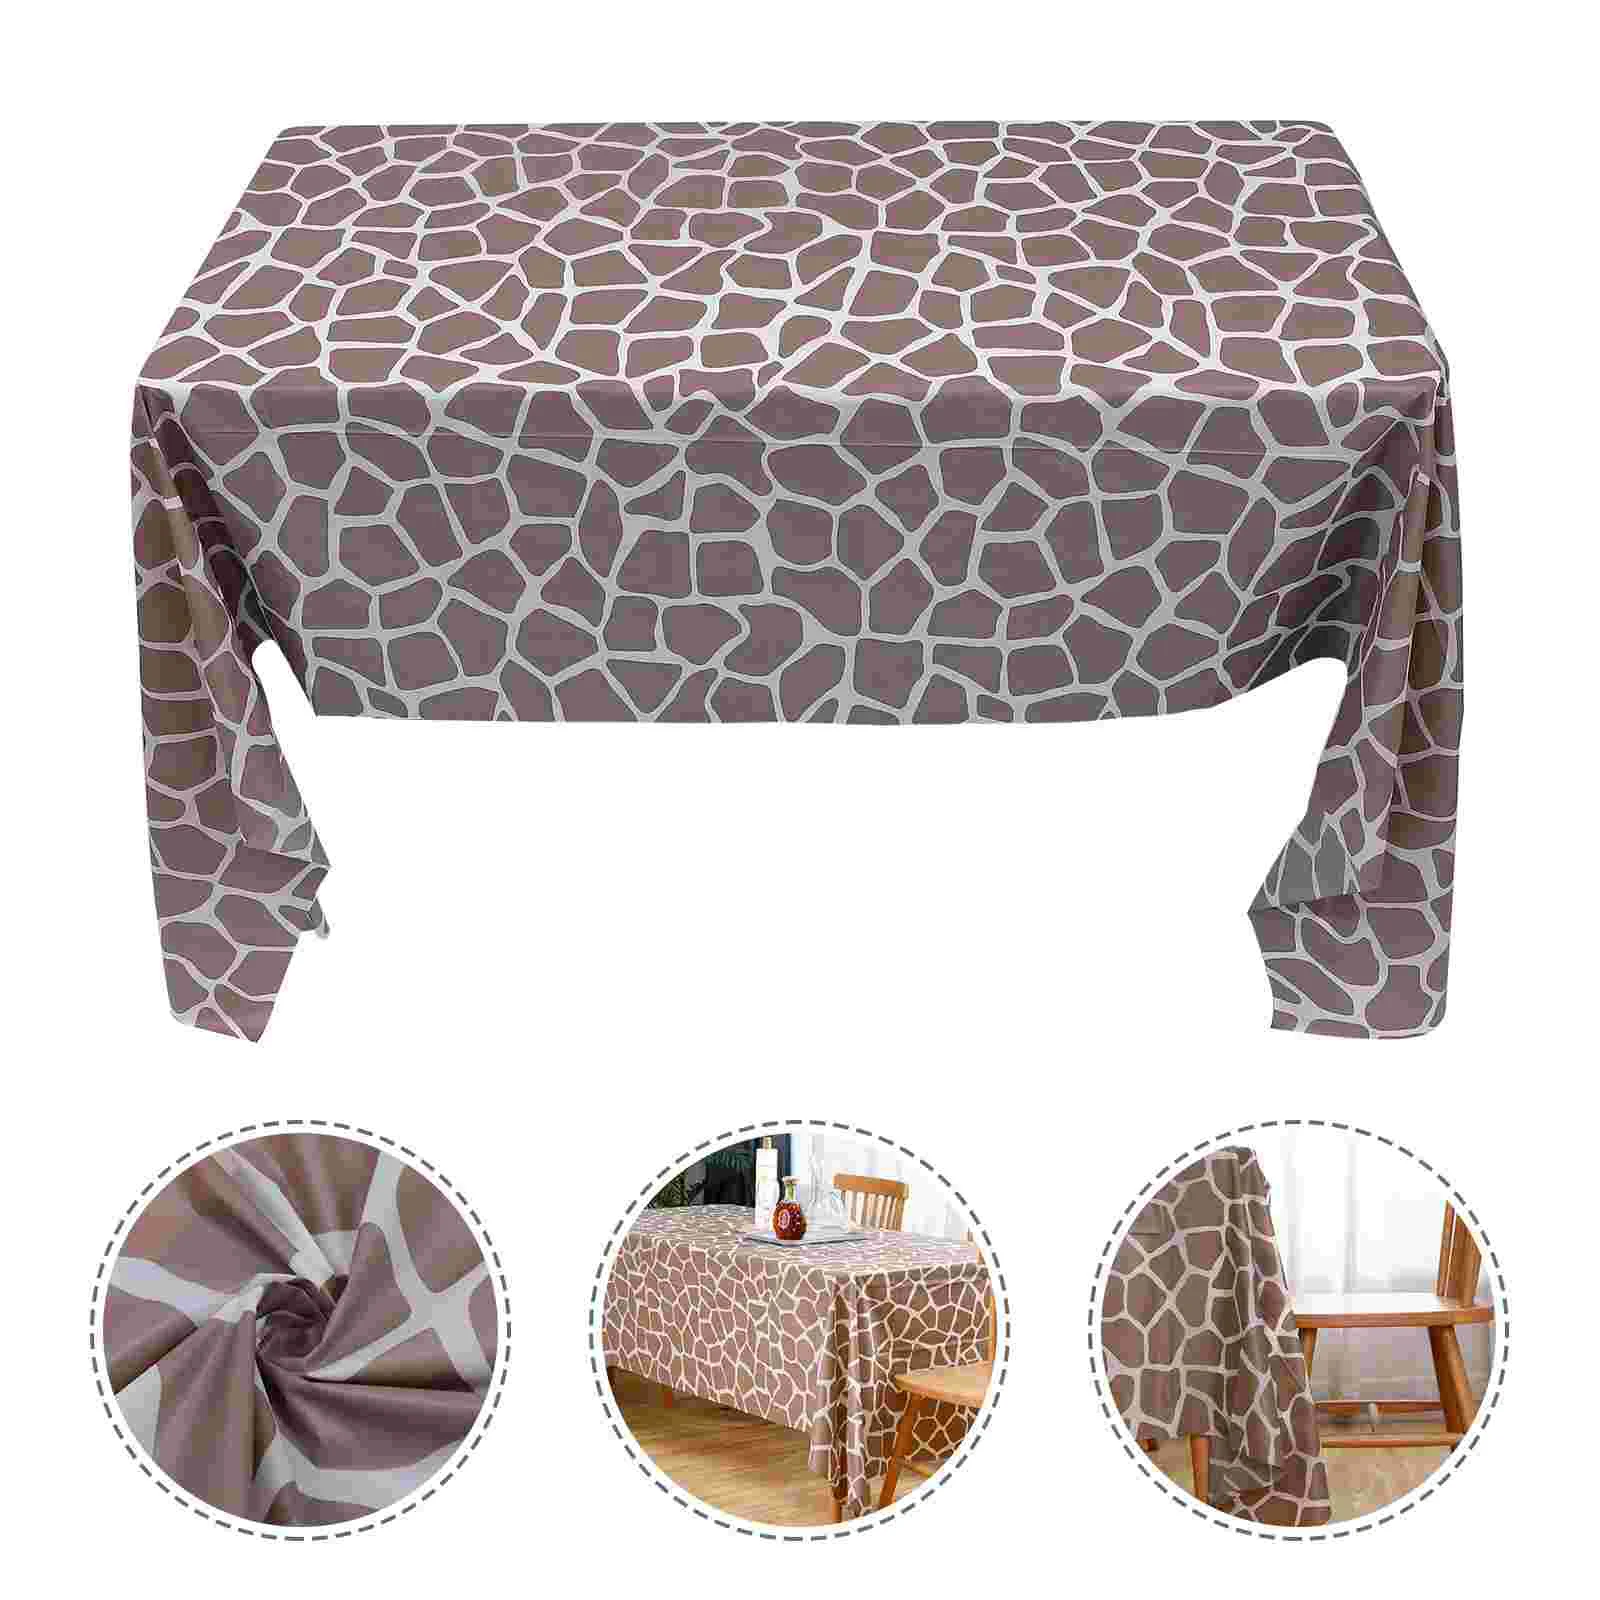 2 Pcs Animal Tablecloth Grain Disposable Party Dresser Decor Picnic Cover Zebra Home